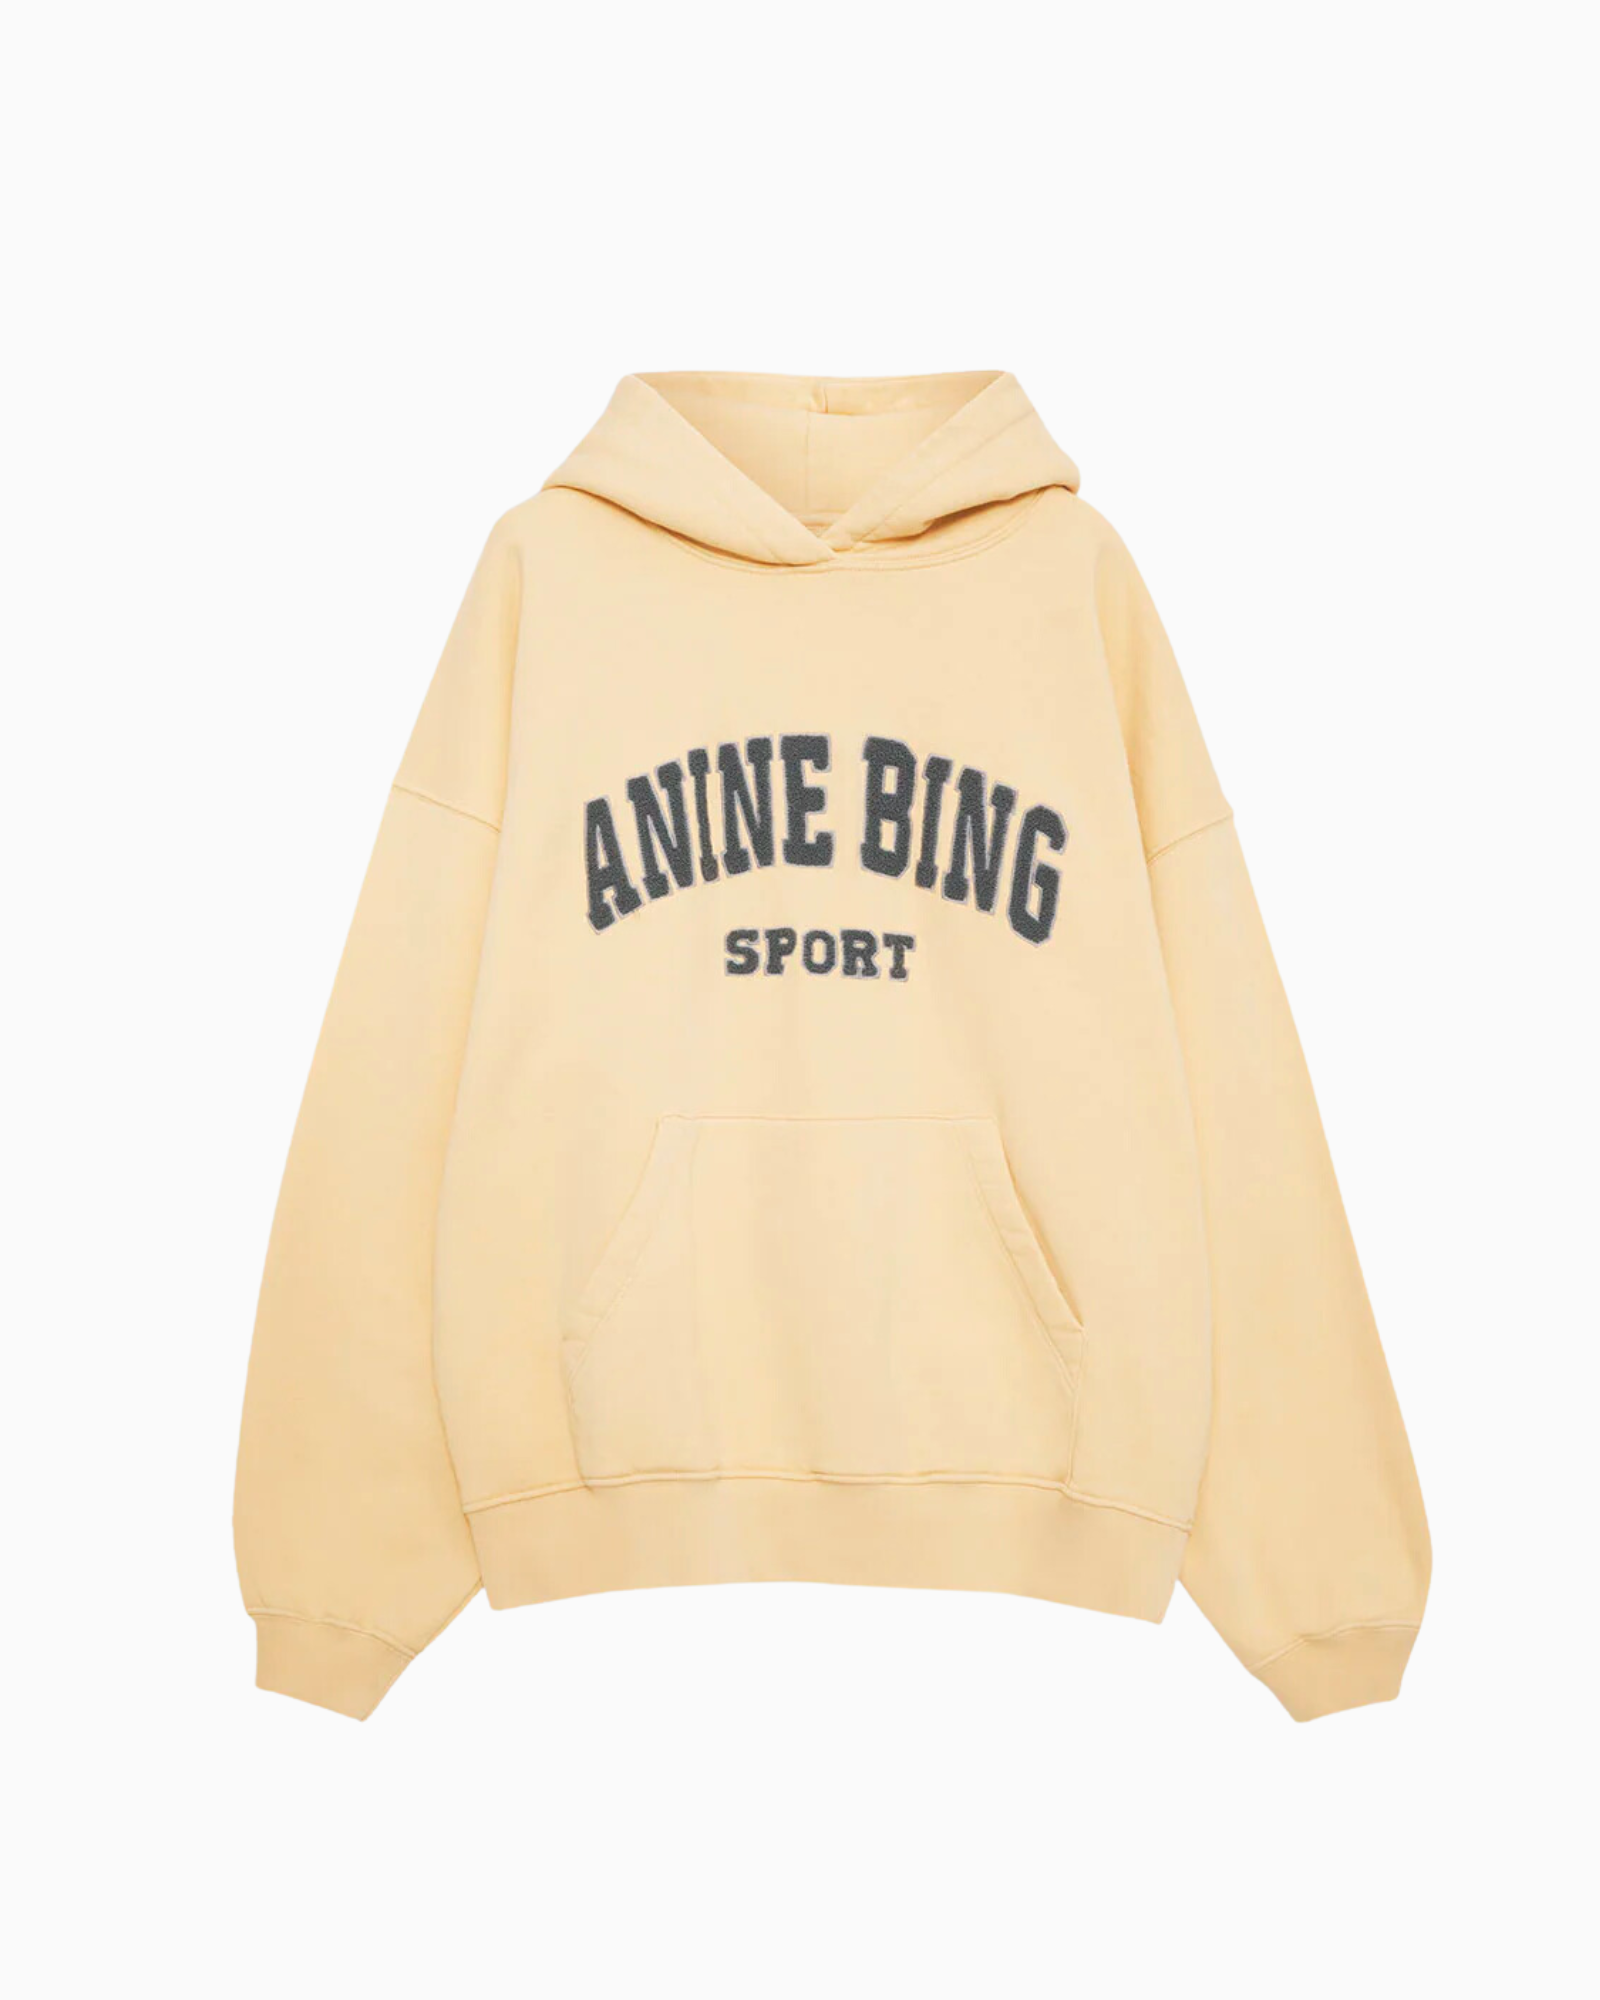 Shop Anine Bing Luxurious Wardrobe Staples and Accessories | Azure – AZURE